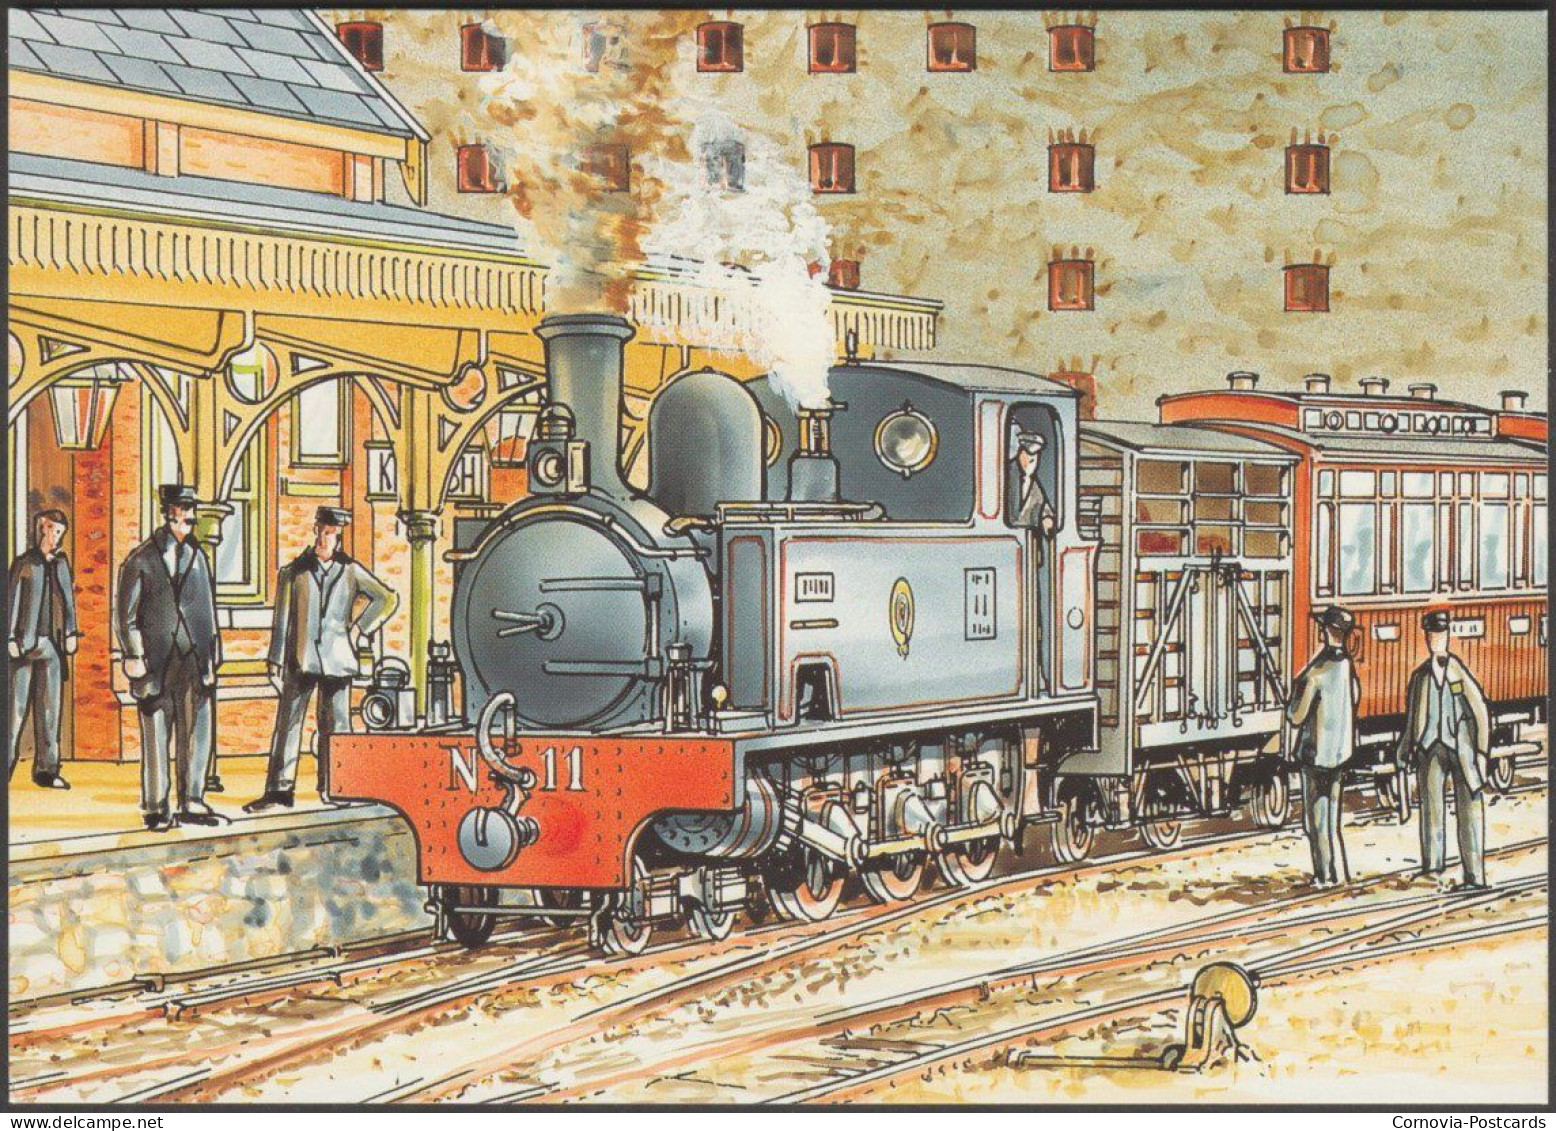 West Clare Railway By Charles Rycraft, 28p Stamp, 1995 - An Post Maximum Card - Cartoline Maximum